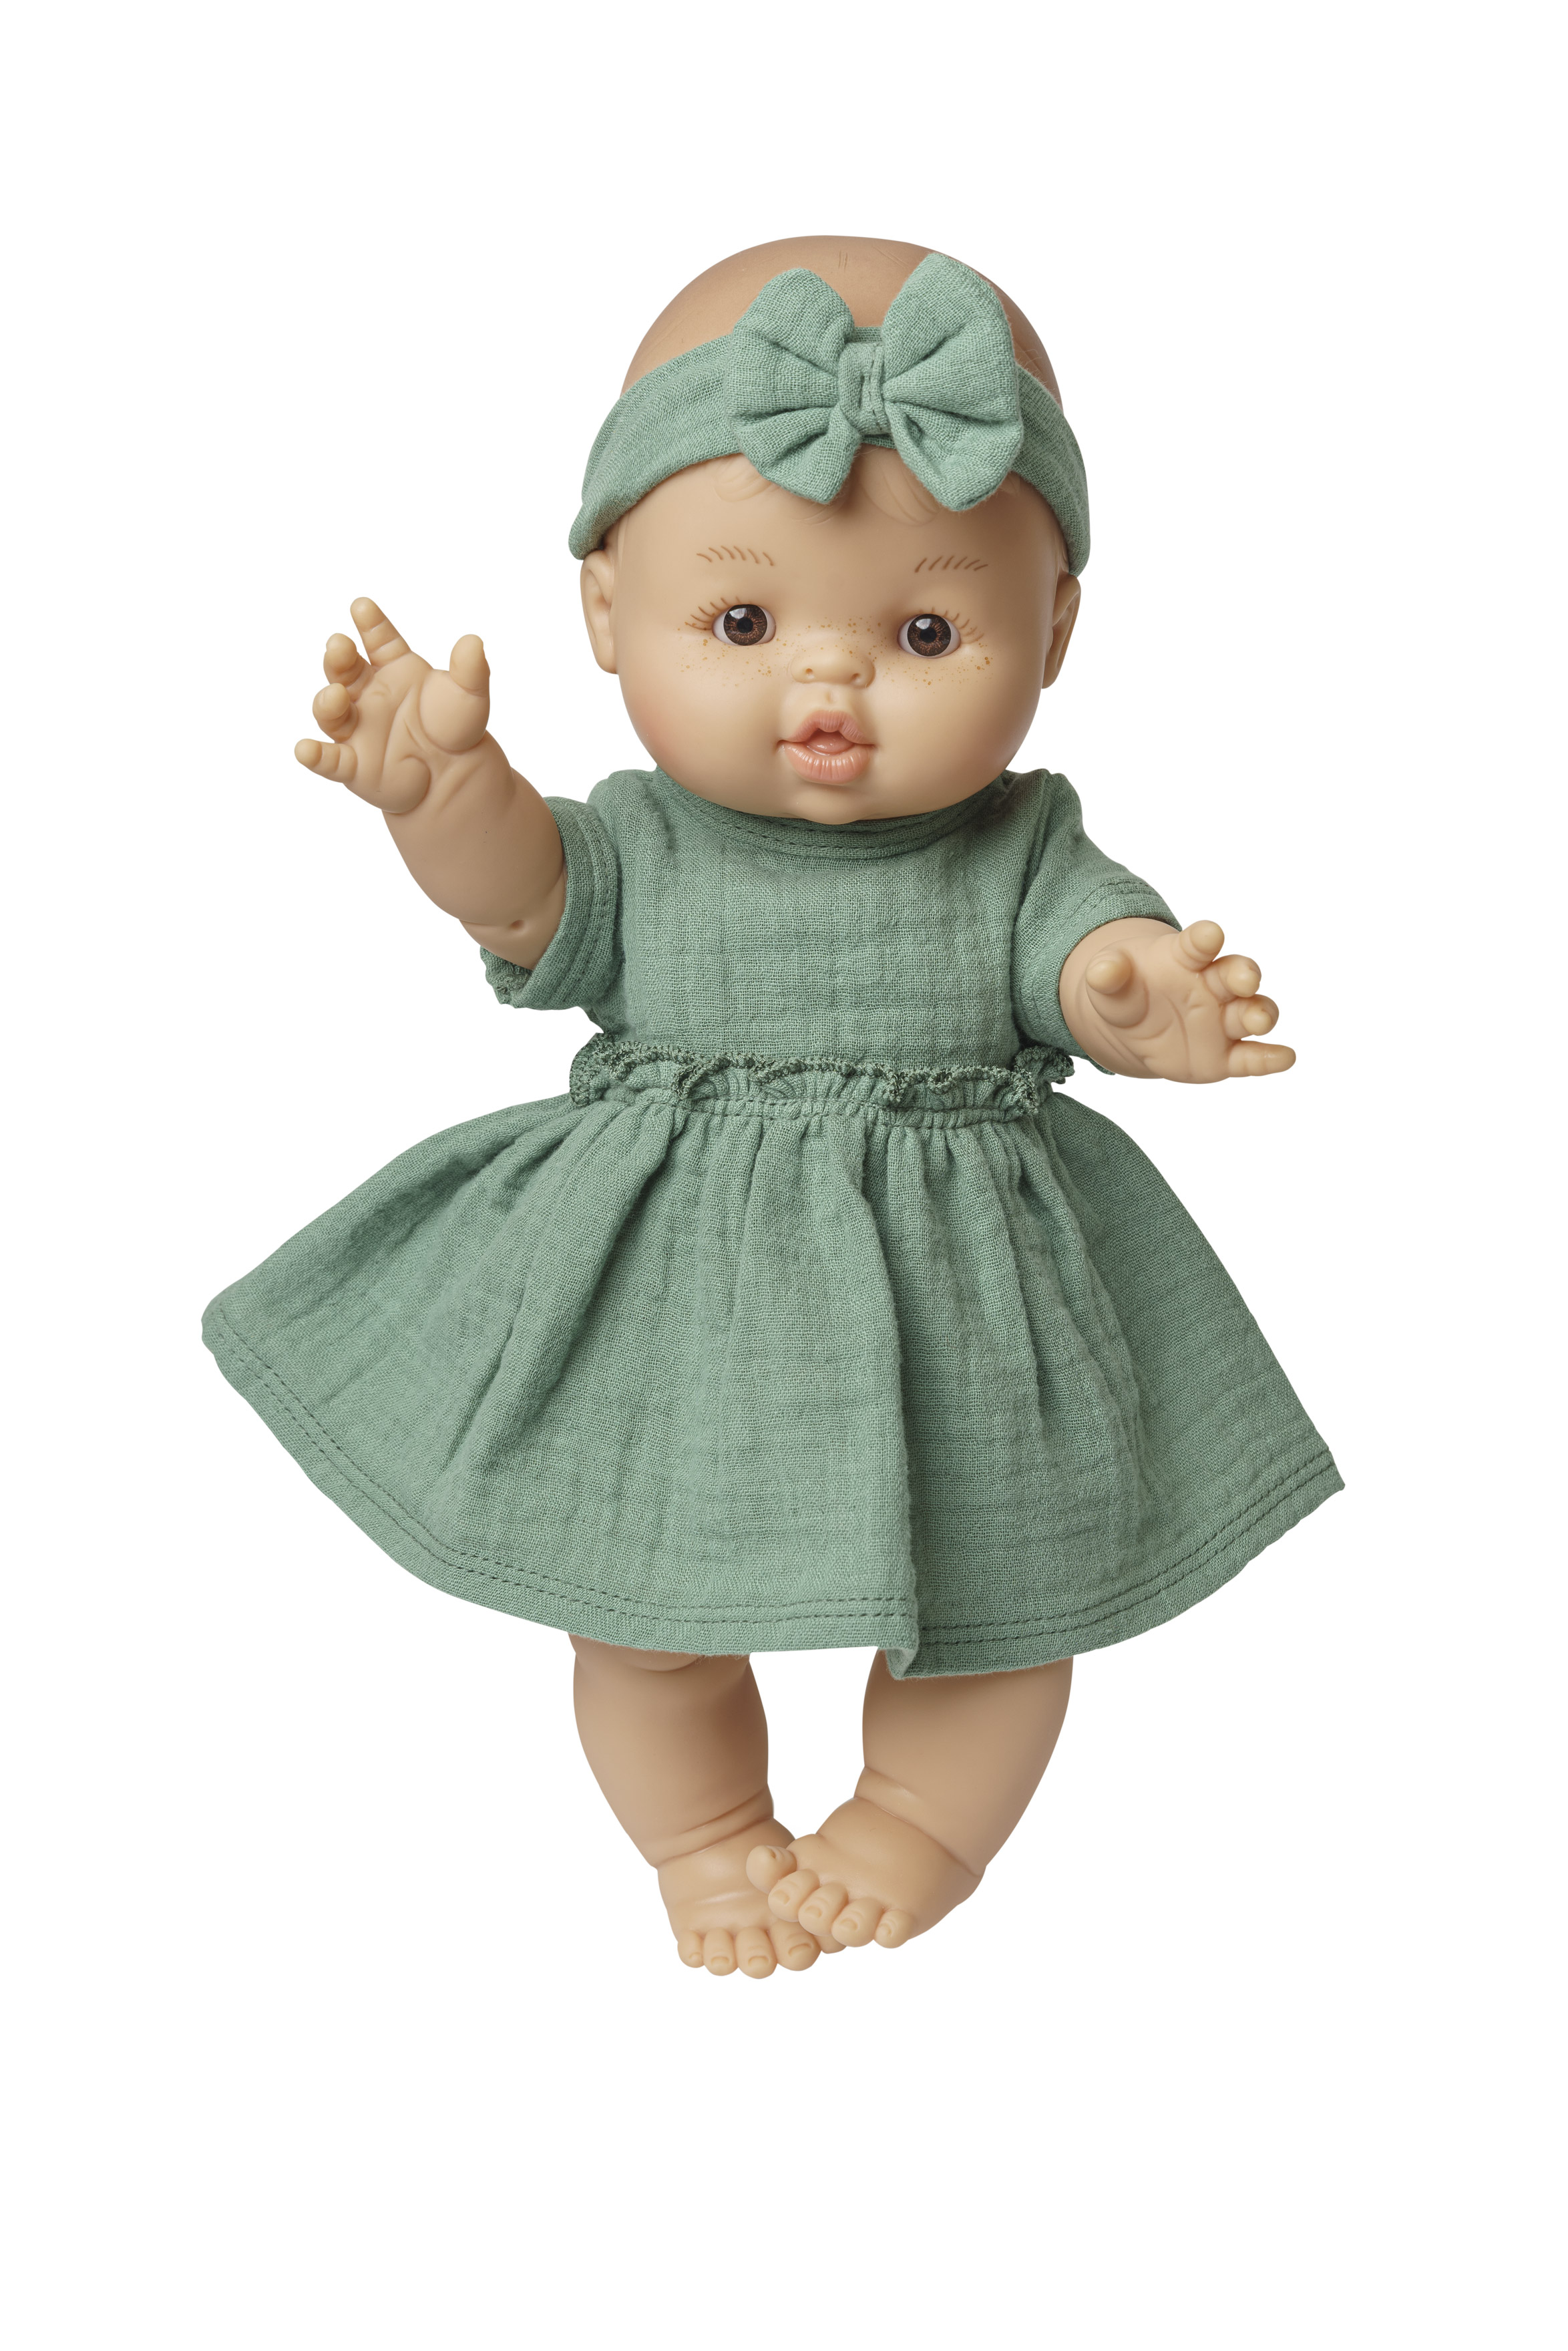 Set: Girl doll with organic dress, sage green, 34 cm